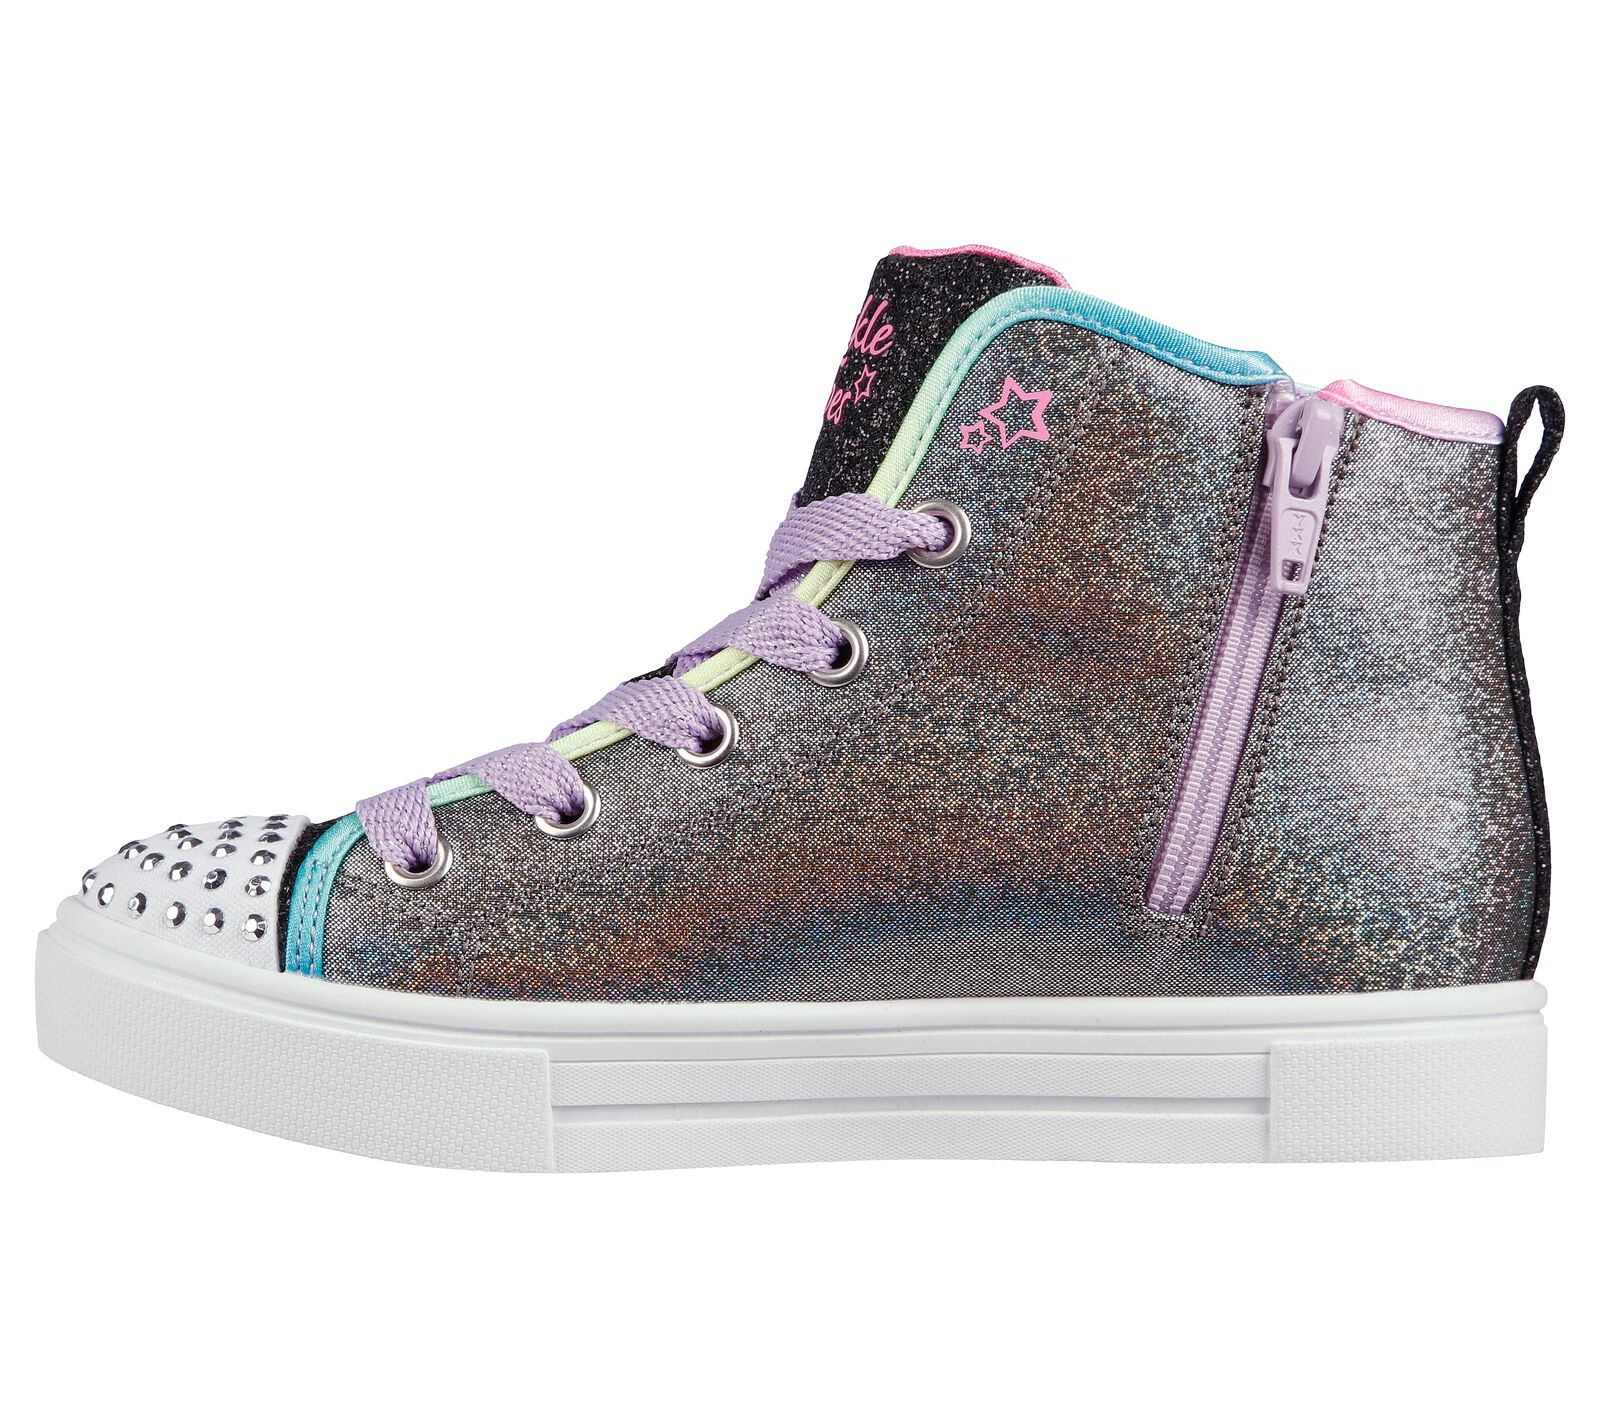 Shop the Twinkle Toes: Twinkle Sparks - Star Glitz | SKECHERS